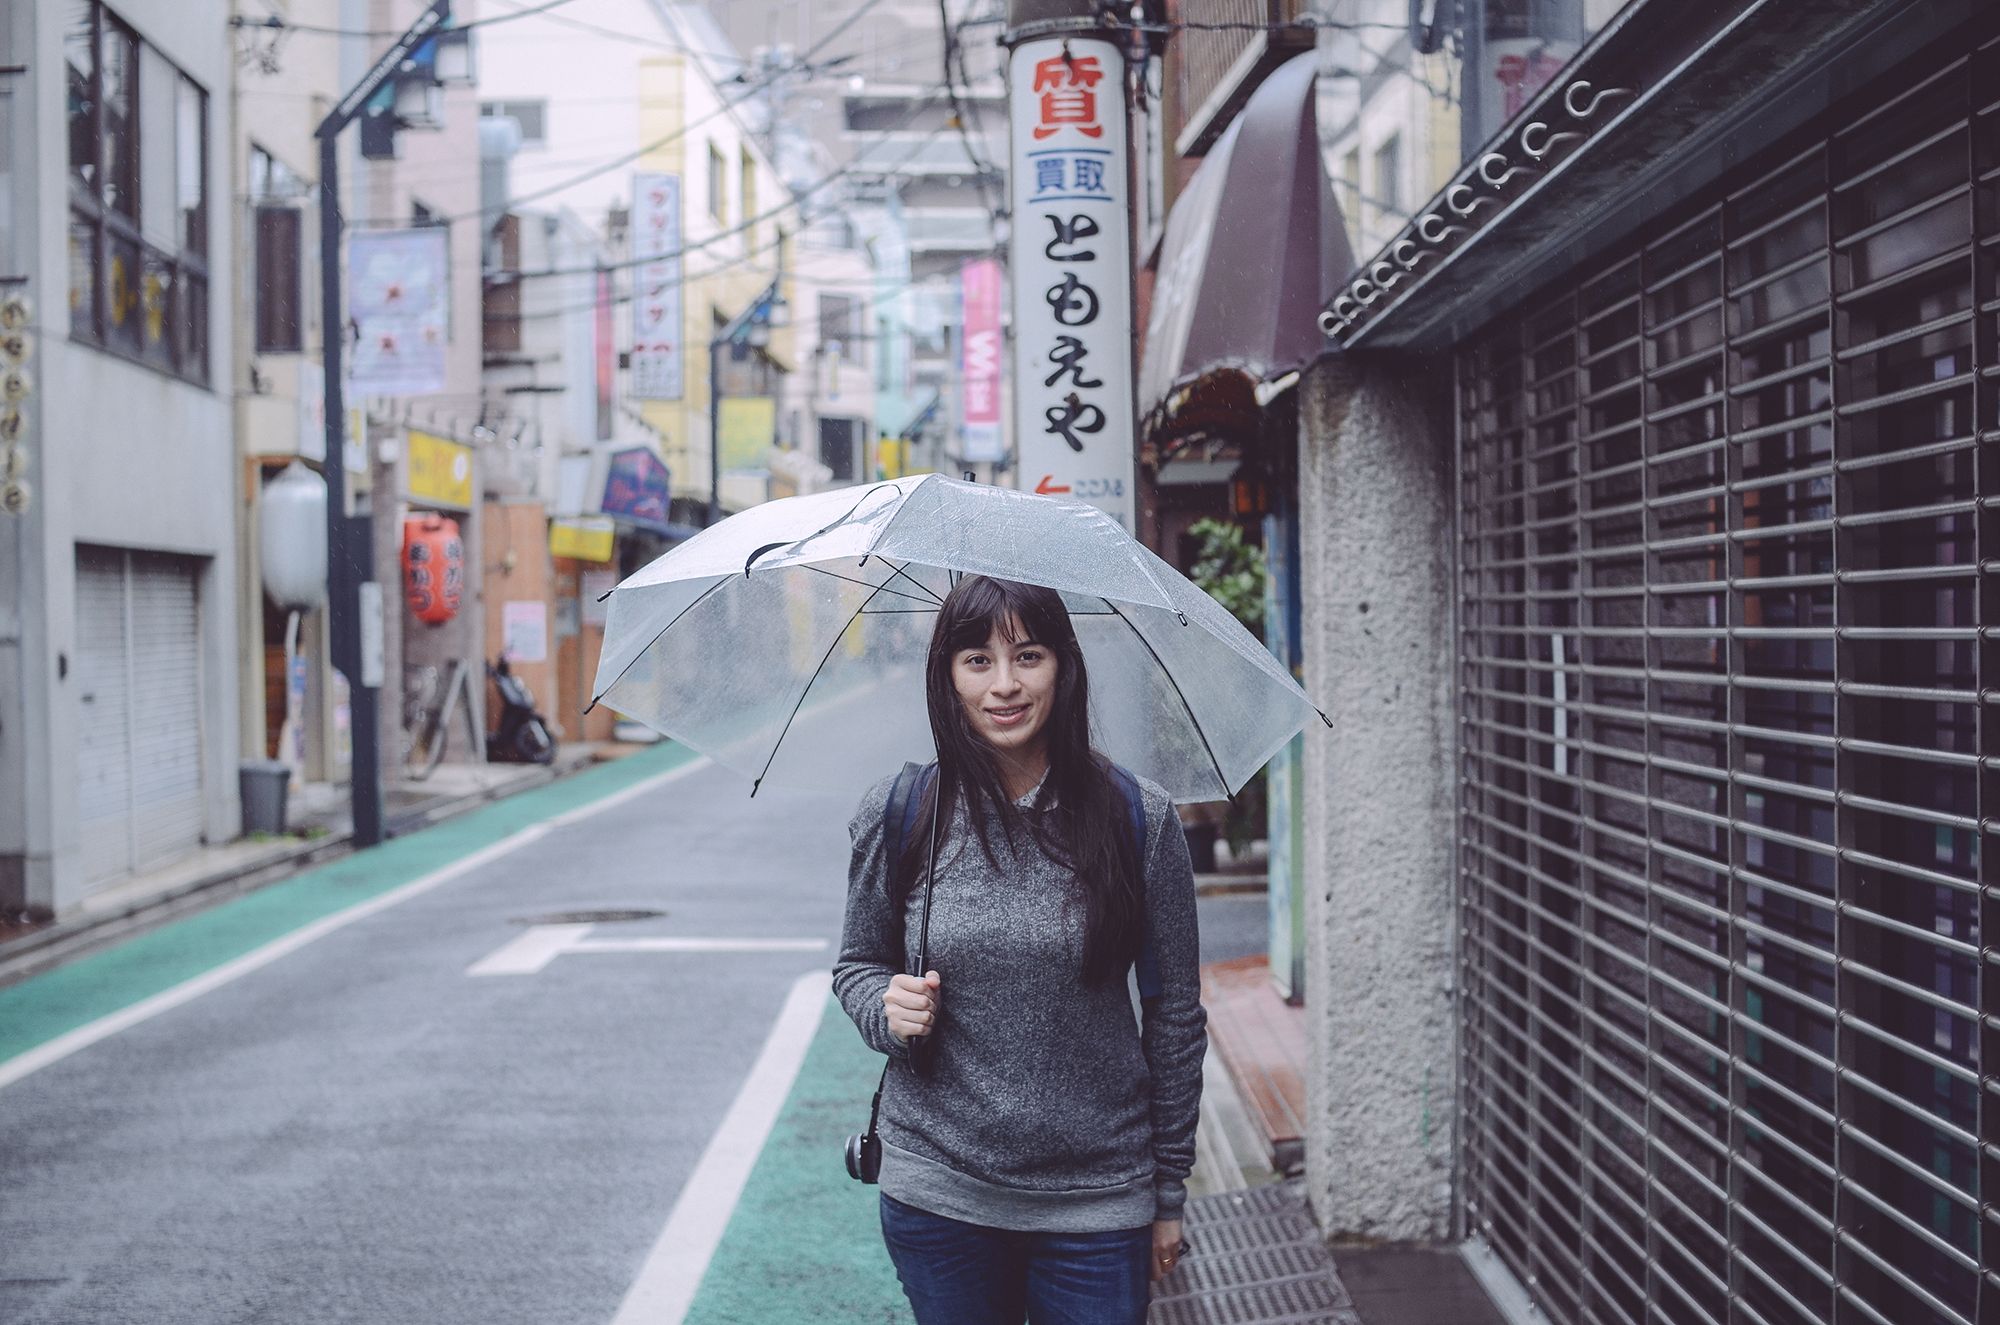 This is me walking in the streets of Shimokitazawa, Tokyo. Photo credit Matt Schroeter